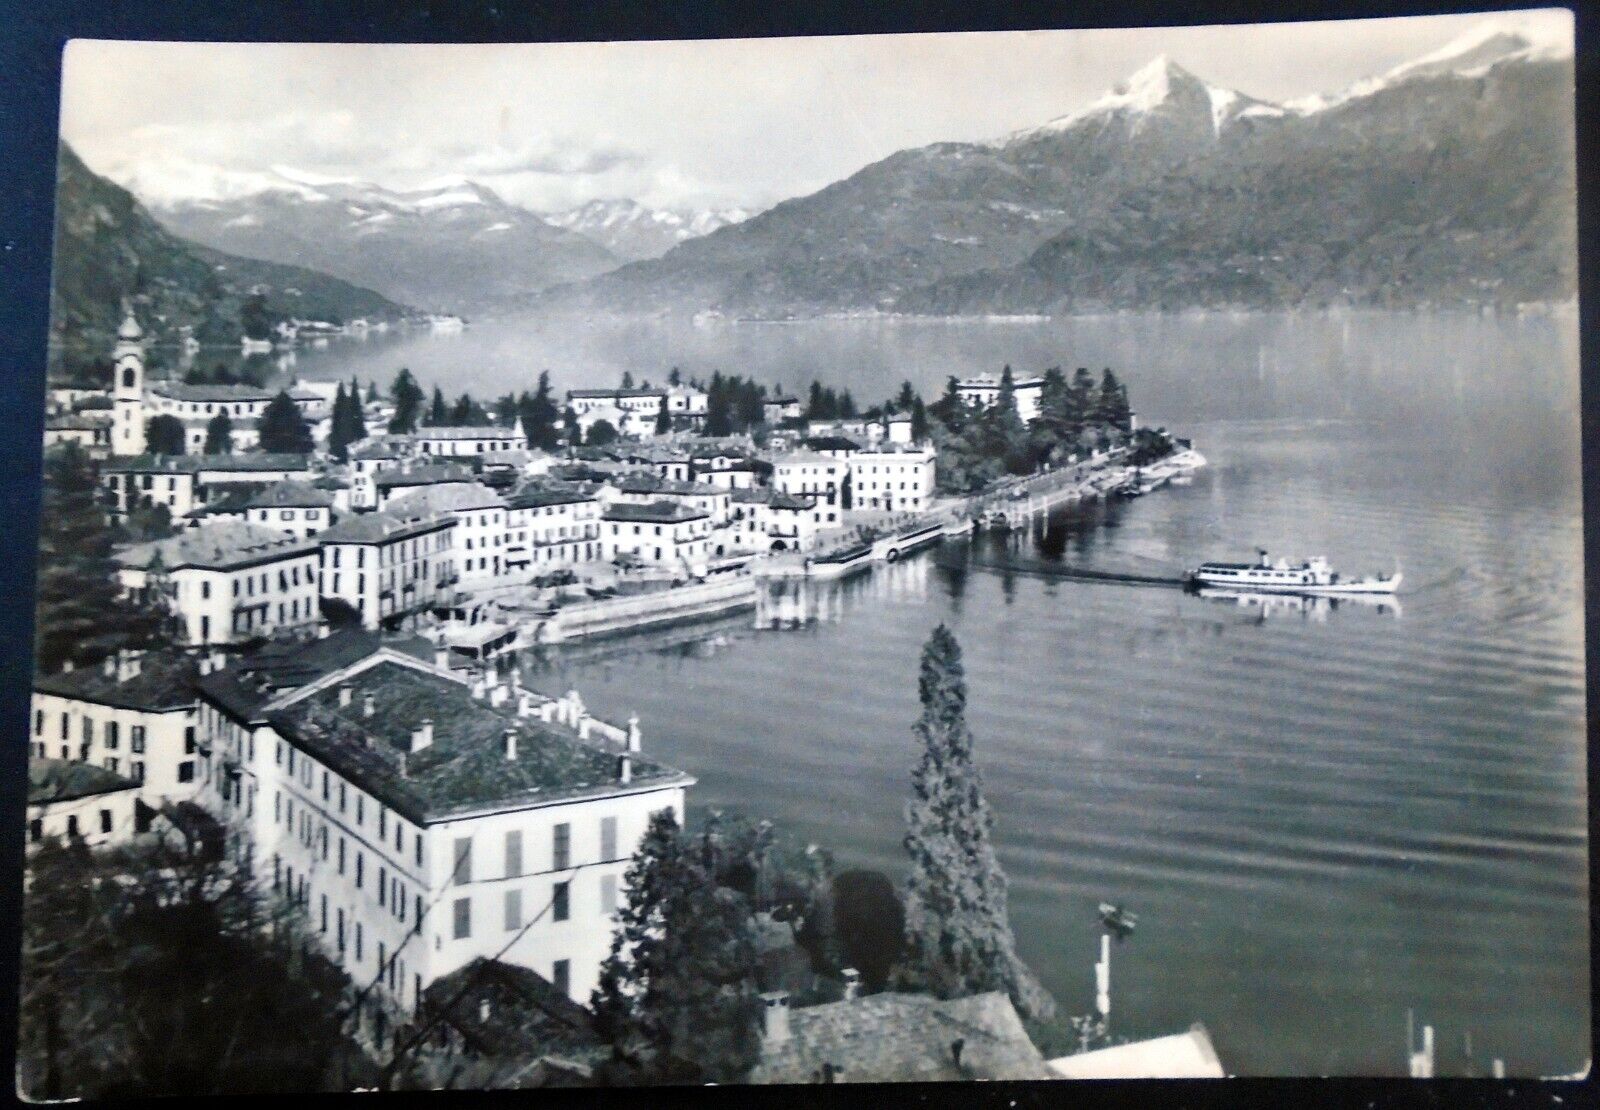 Riverboat, Hotel, Church, Lake Como, Town of Menaggio, Panoramic, Italy